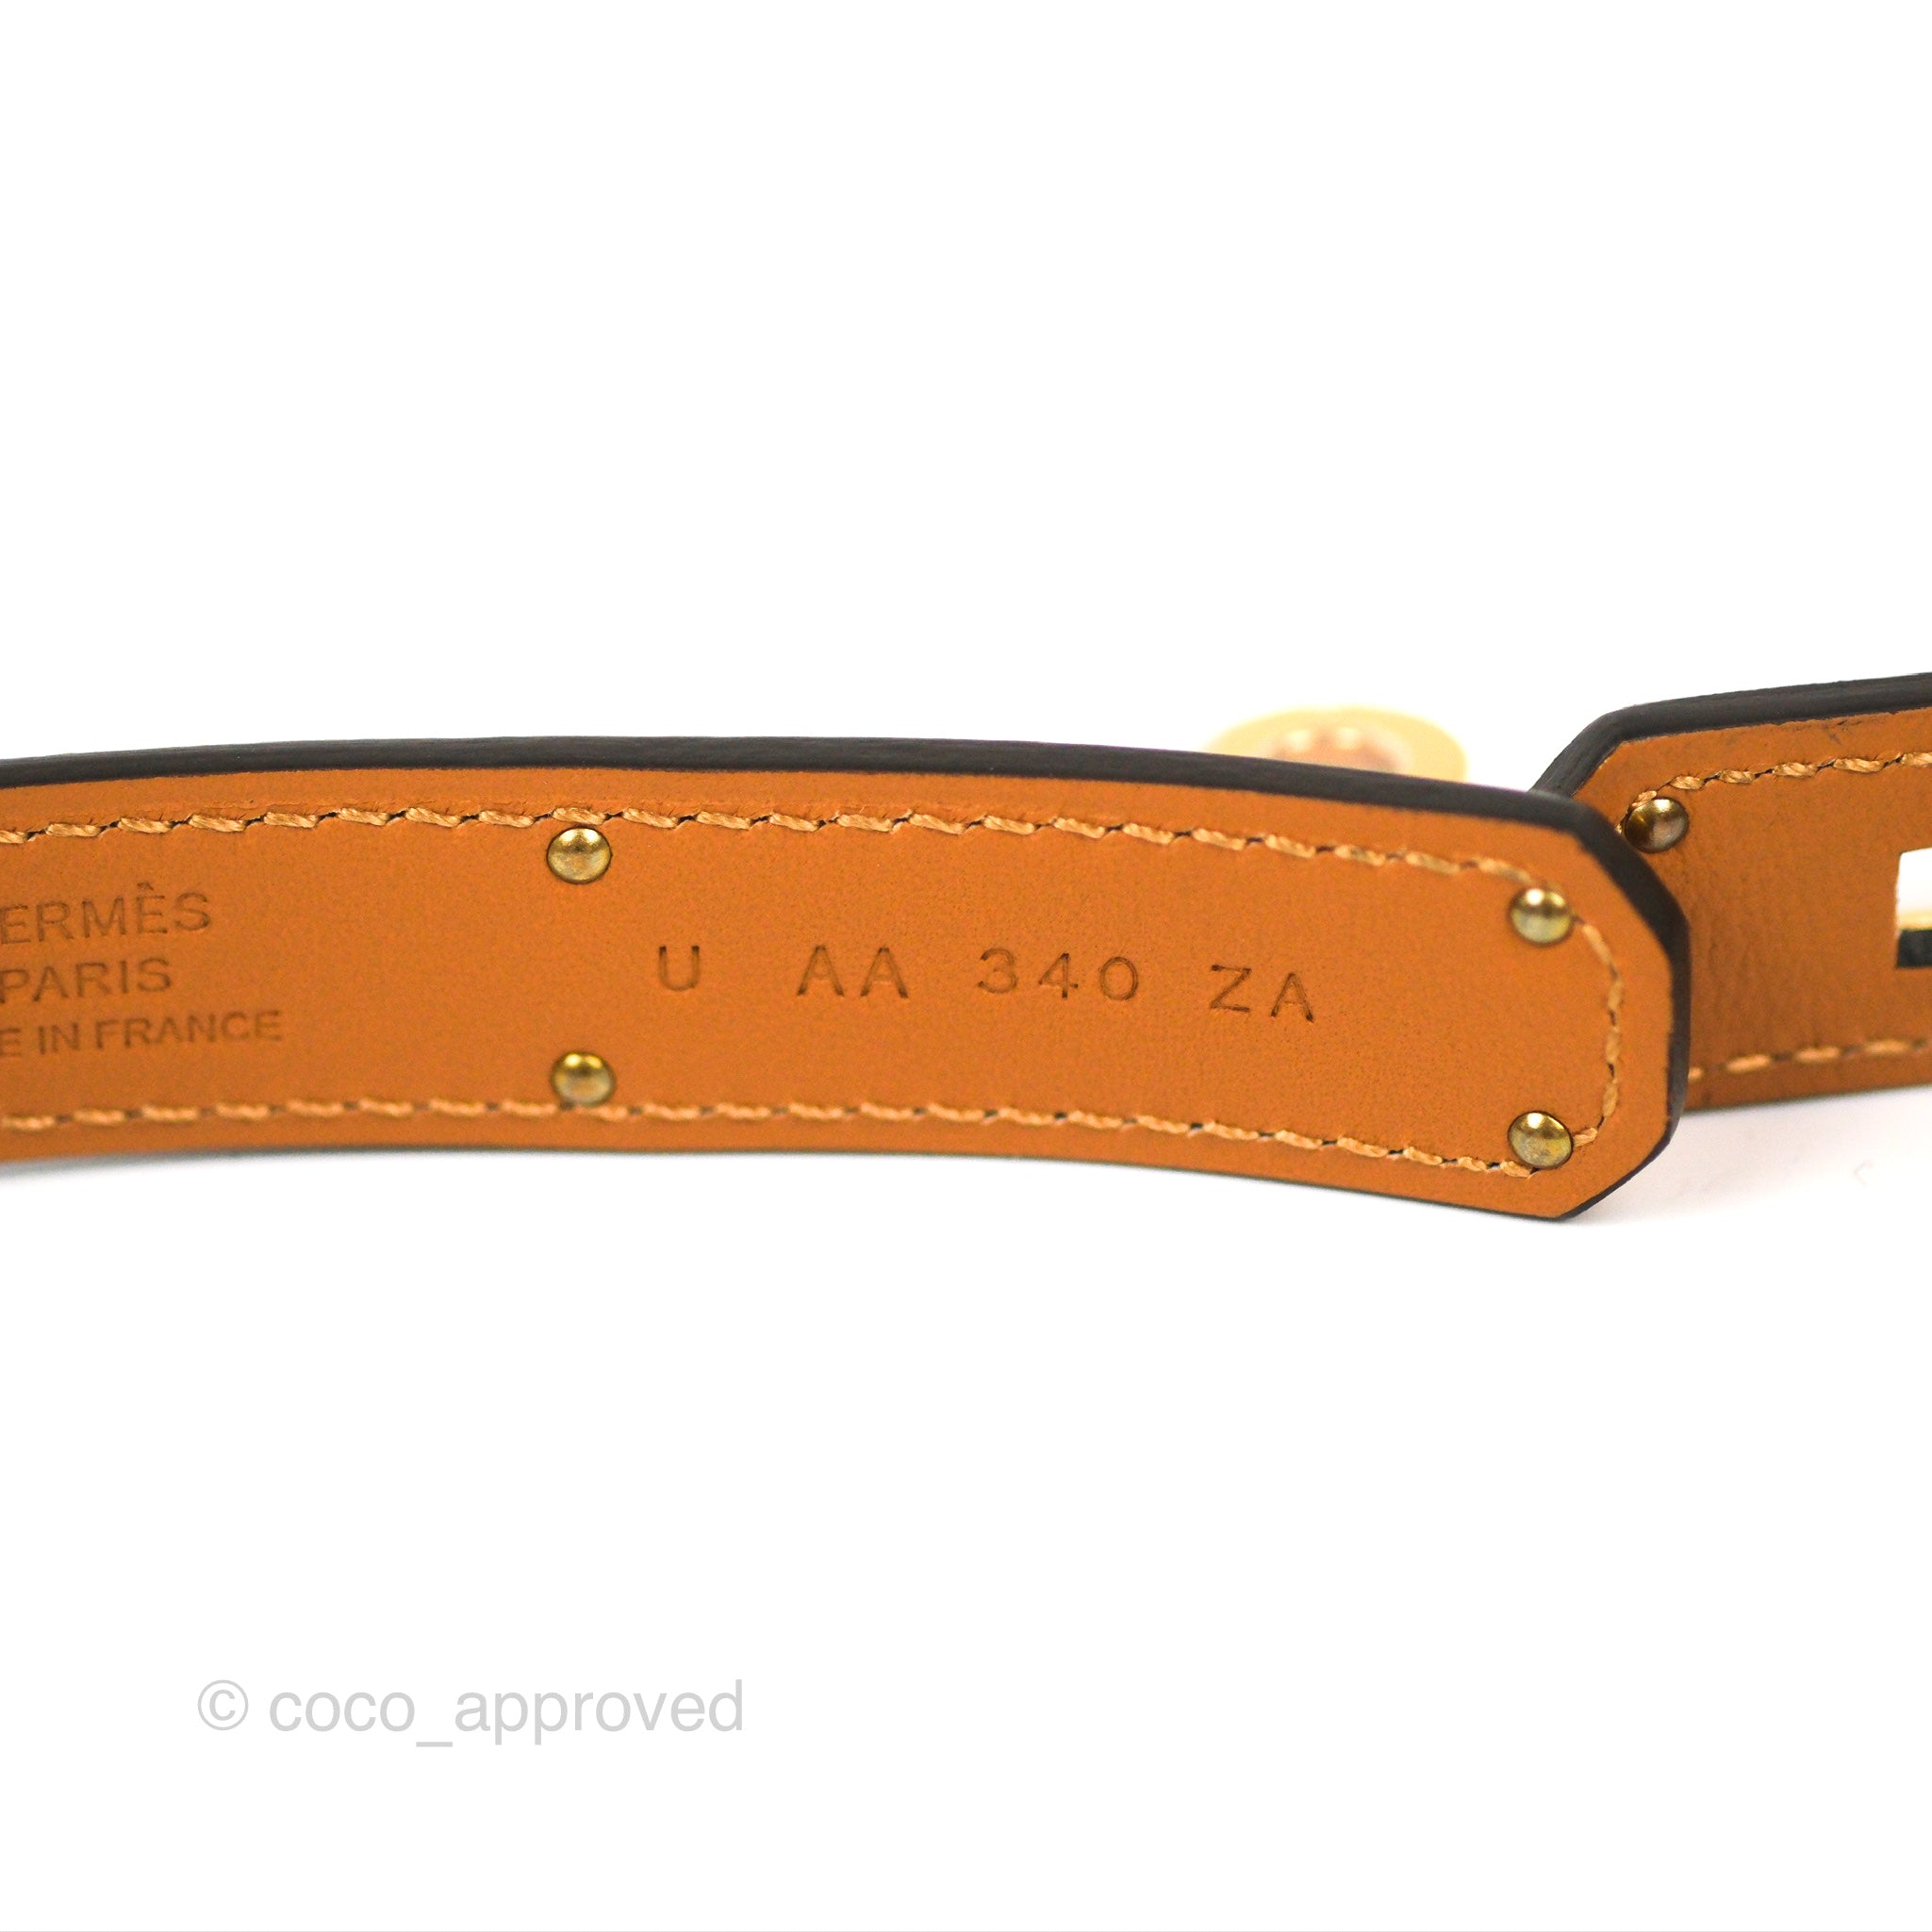 NEW HERMES Etoupe Epsom GHW Kelly 18 Belt One Size Adjustable ( $1025+tax)